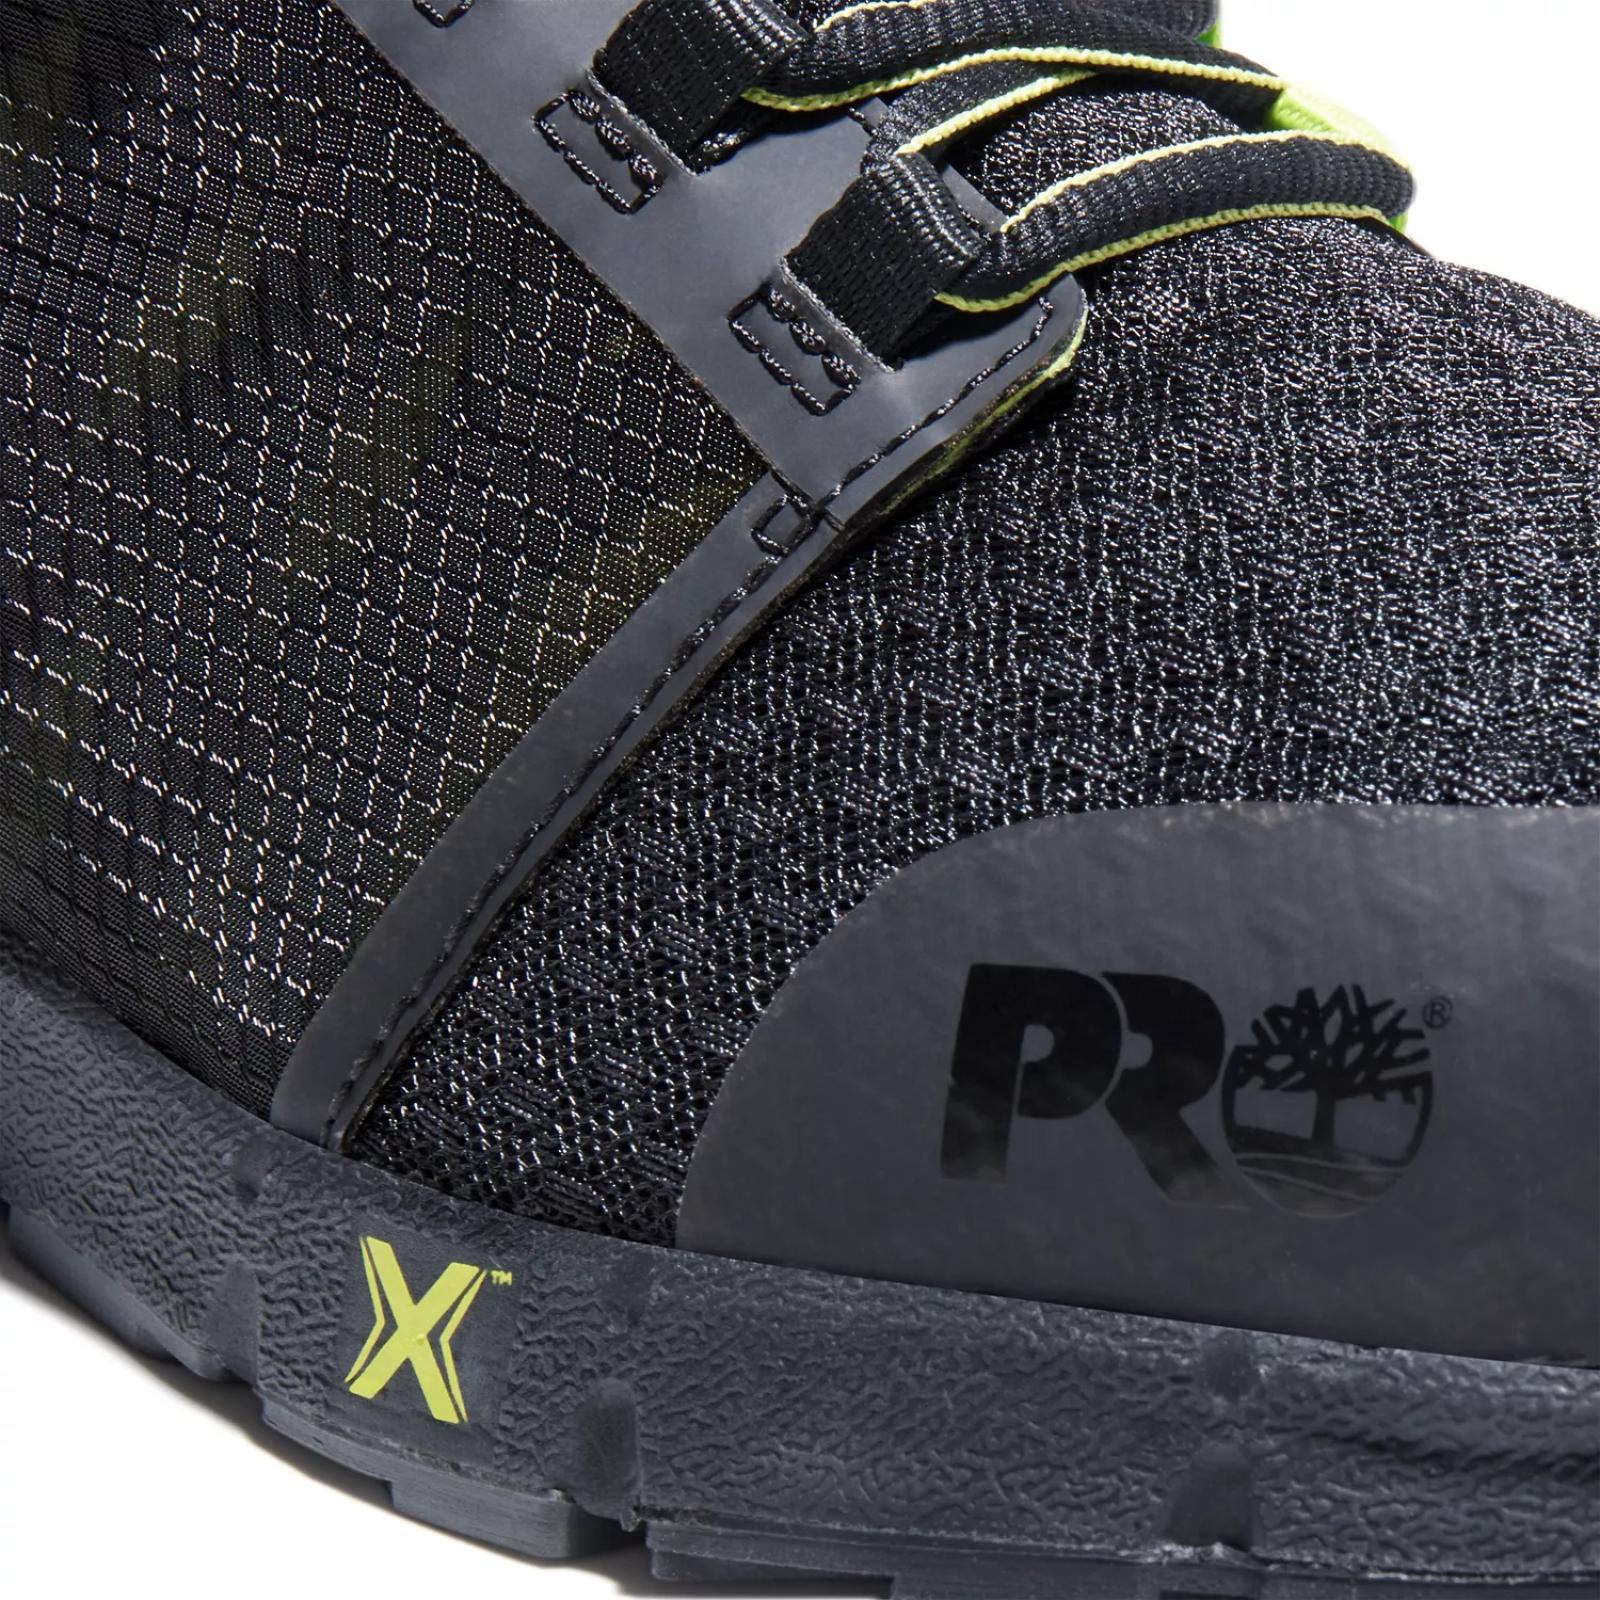 Timberland PRO Men's Radius Composite Toe Work Shoe